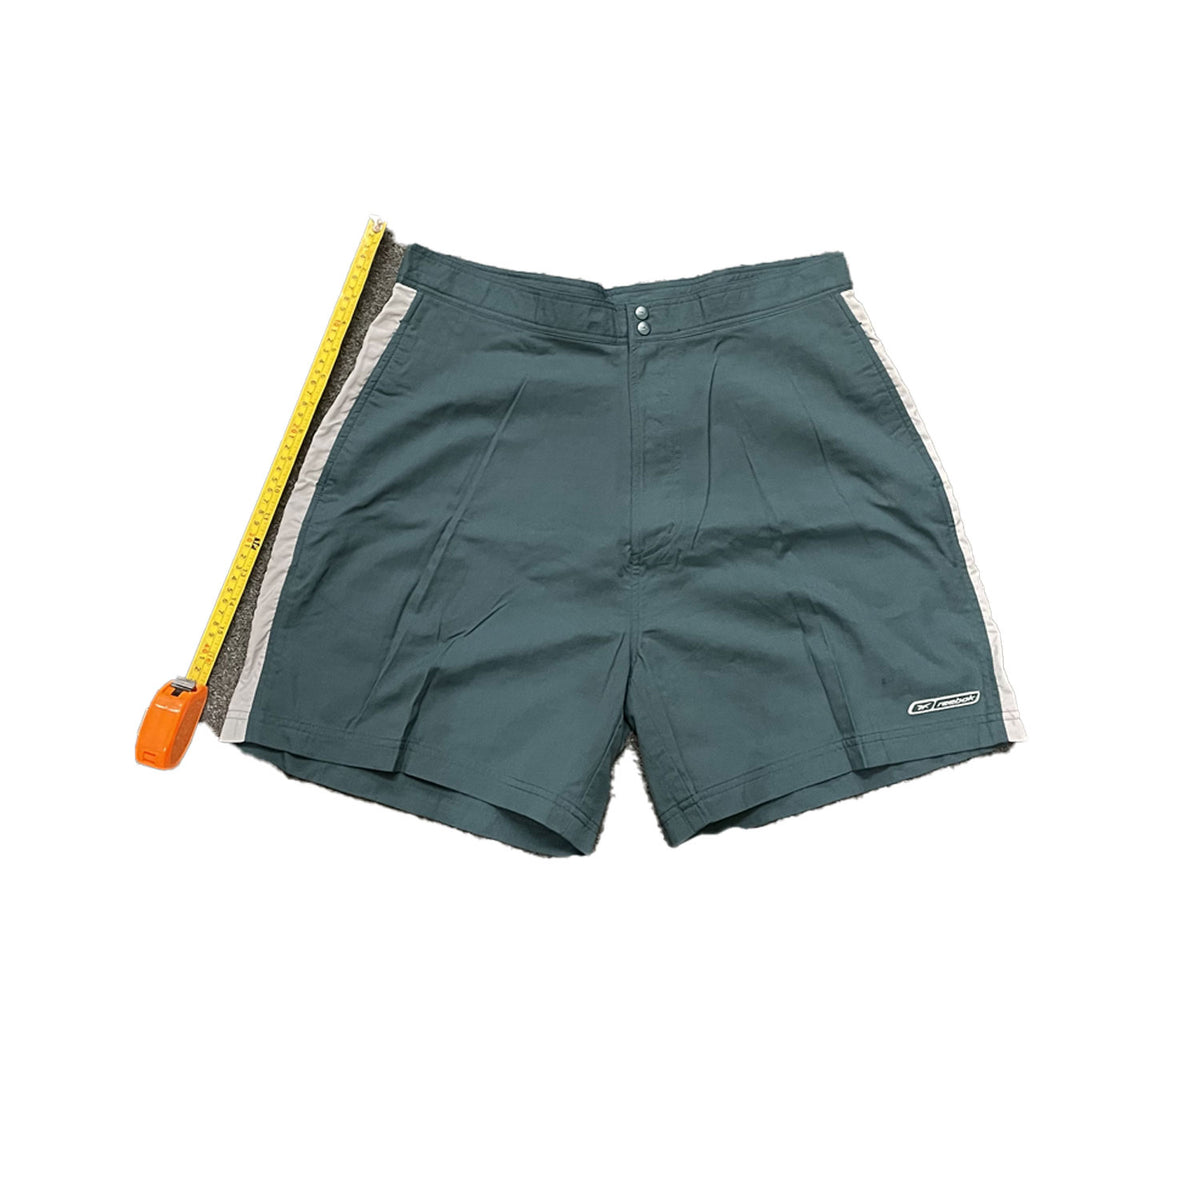 Reebok Original Mens Clearance Contrast Athletic Shorts